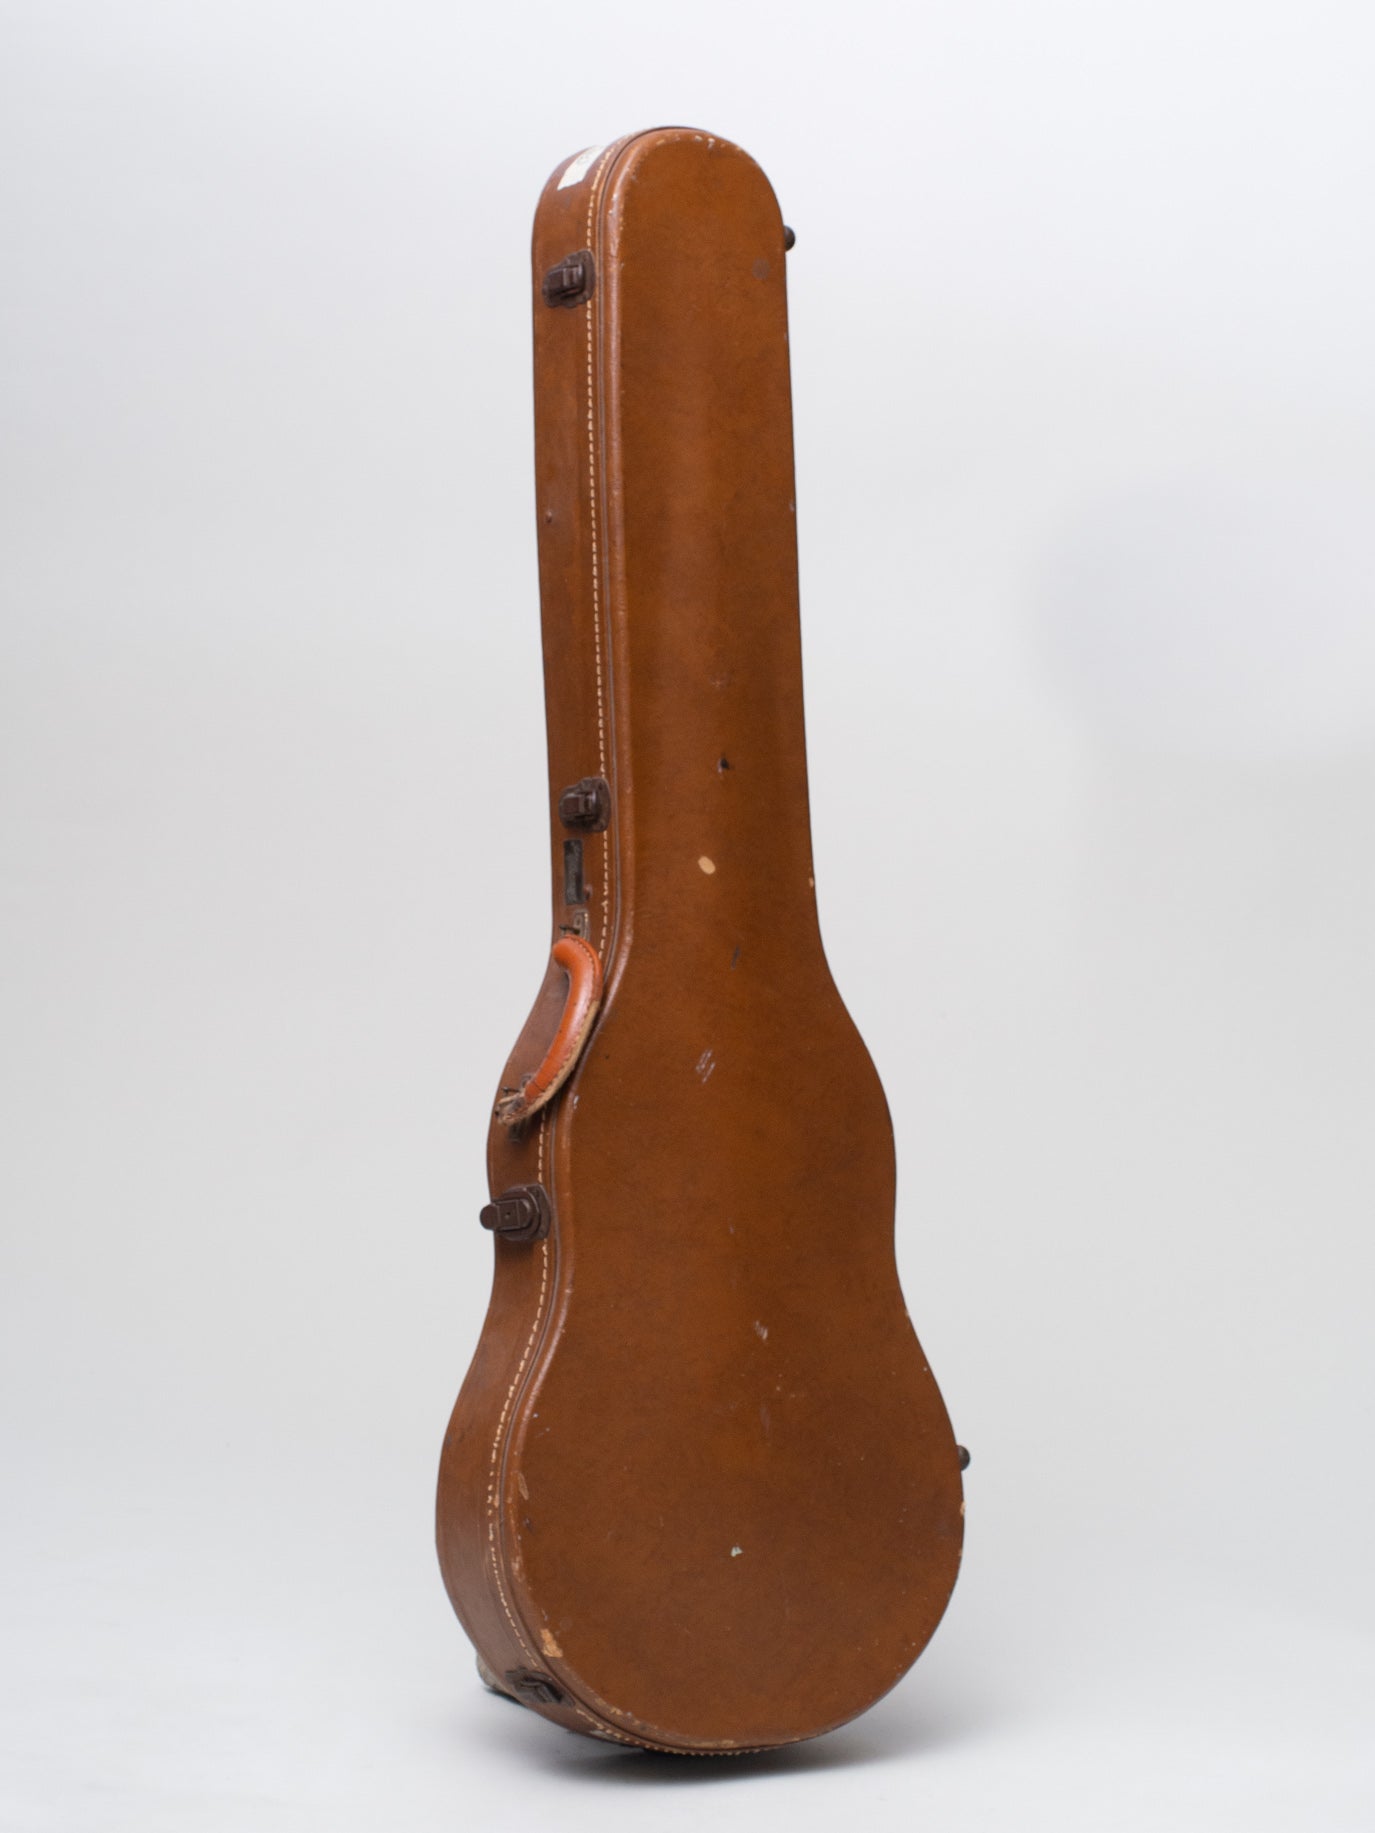 1954 Gibson Les Paul